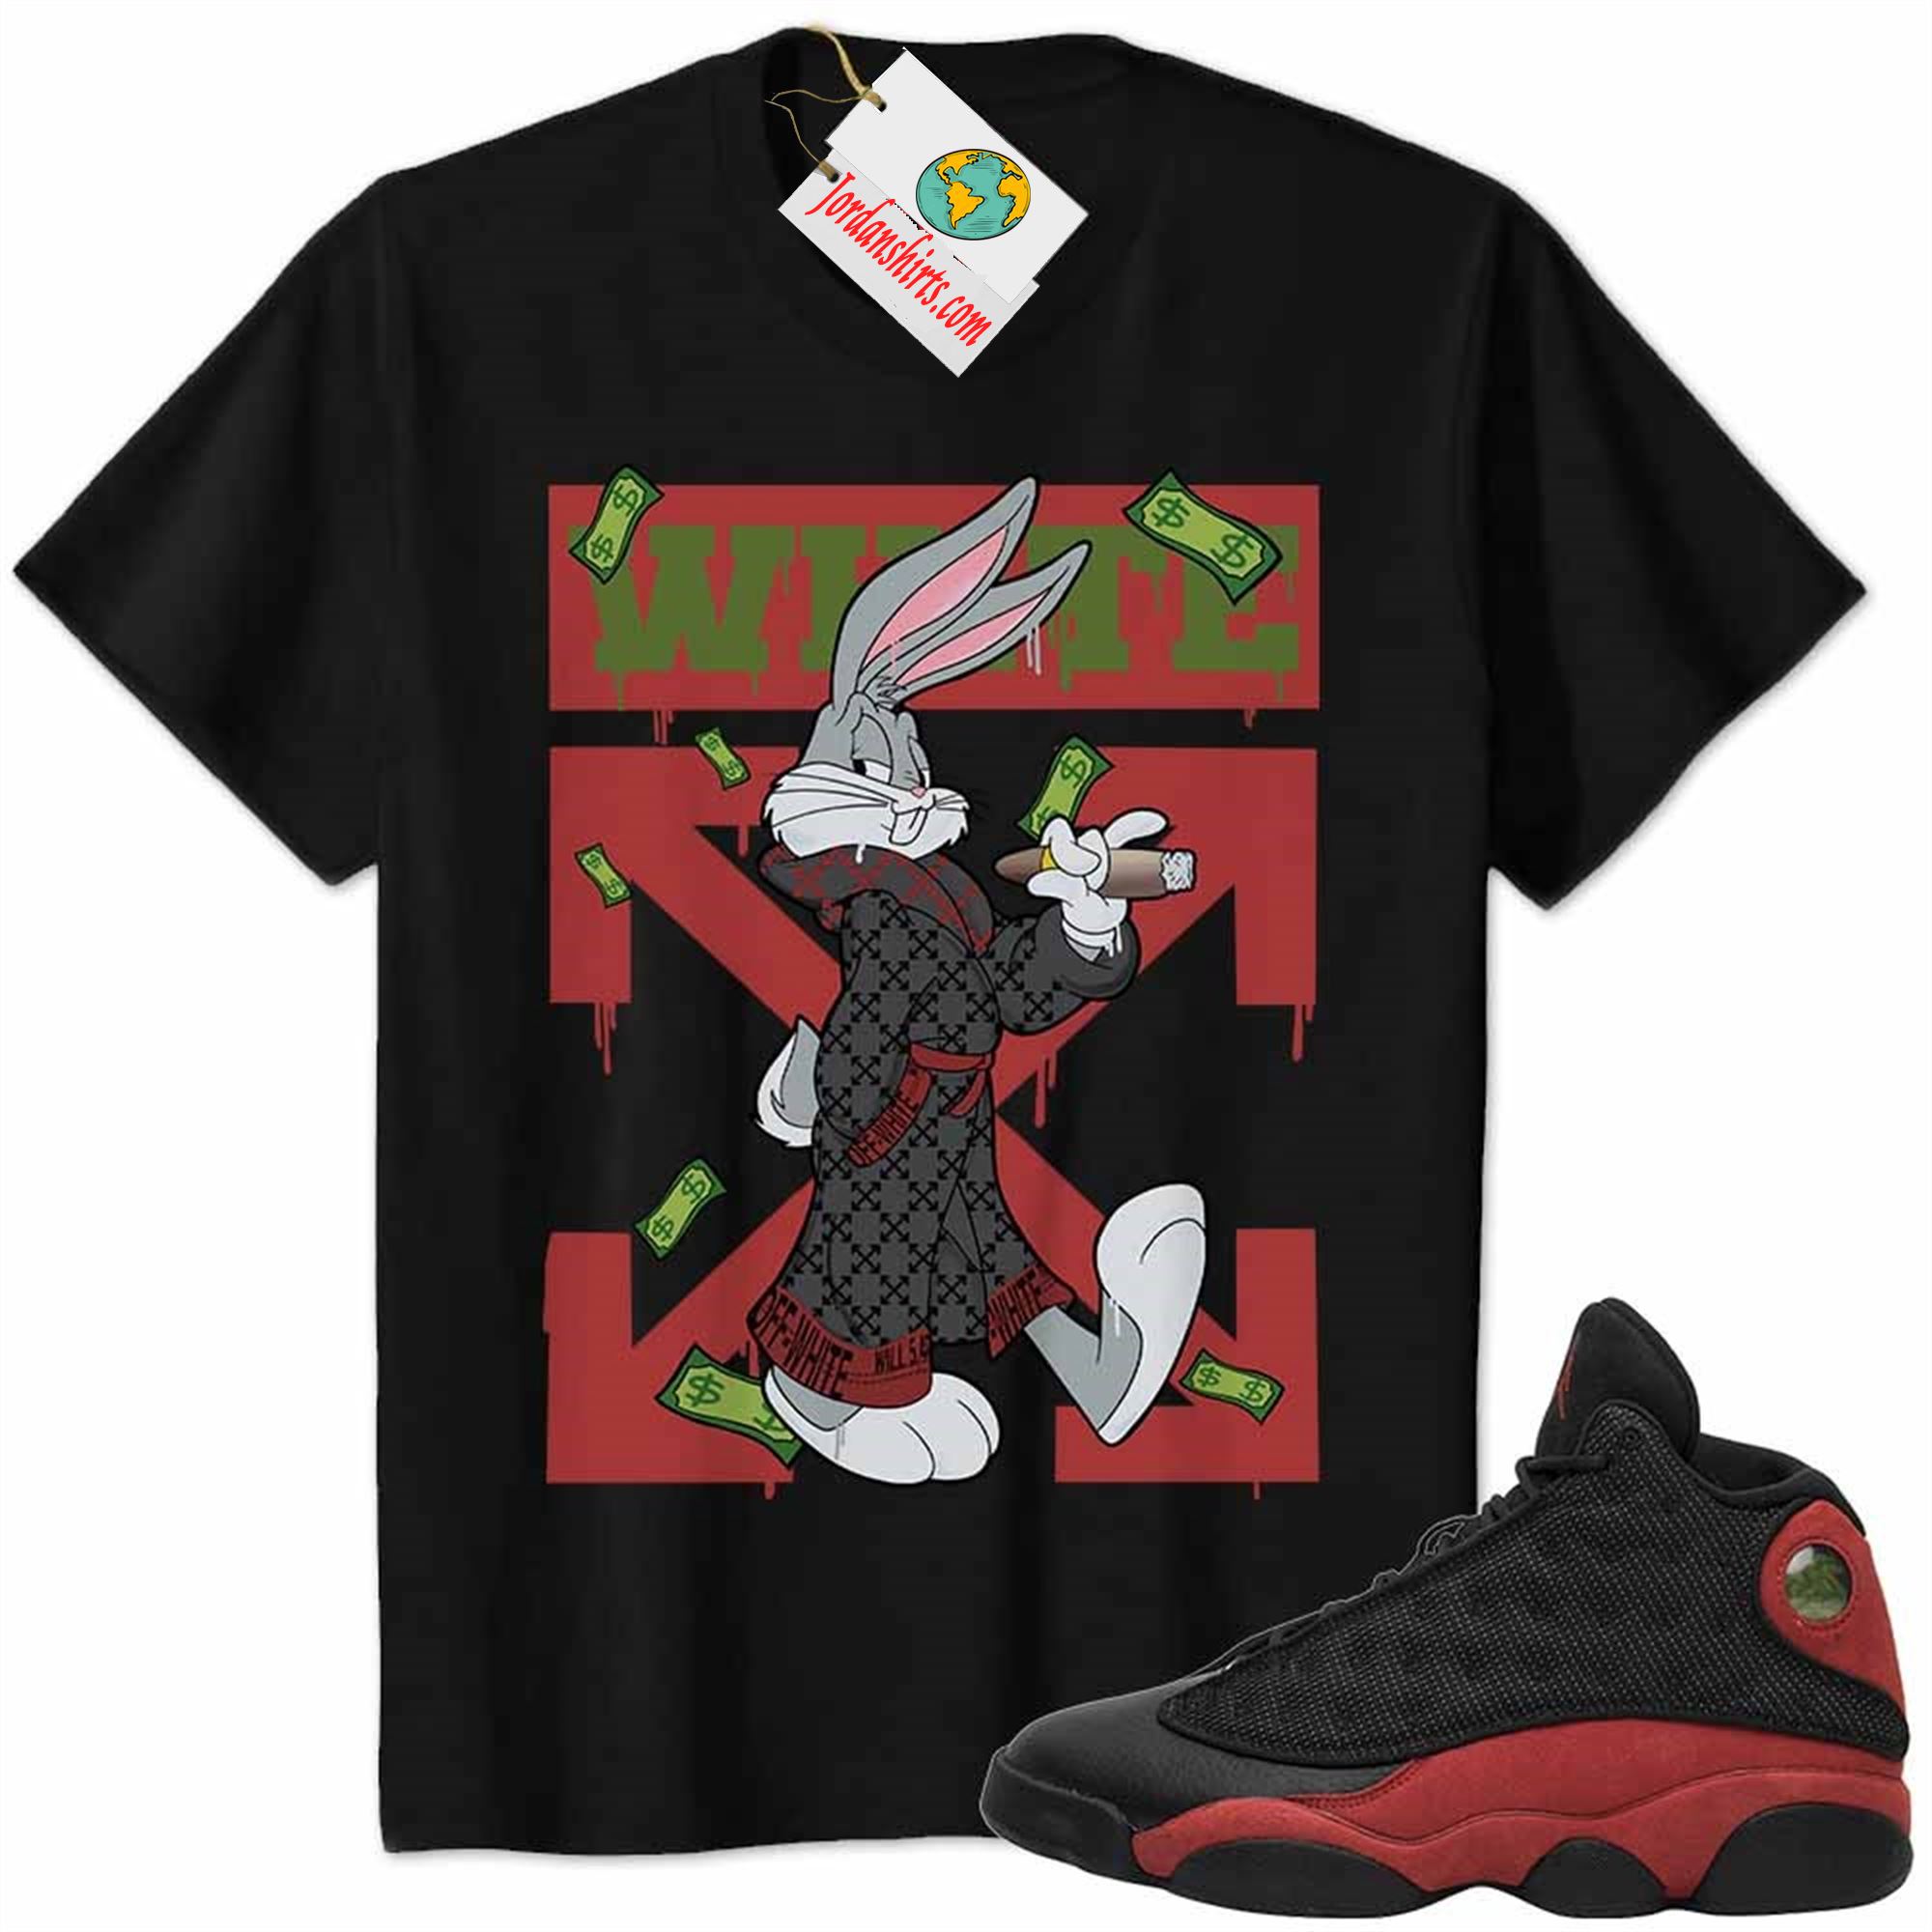 Jordan 13 Shirt, Jordan 13 Bred Shirt Bug Bunny Smokes Weed Money Falling Black Size Up To 5xl